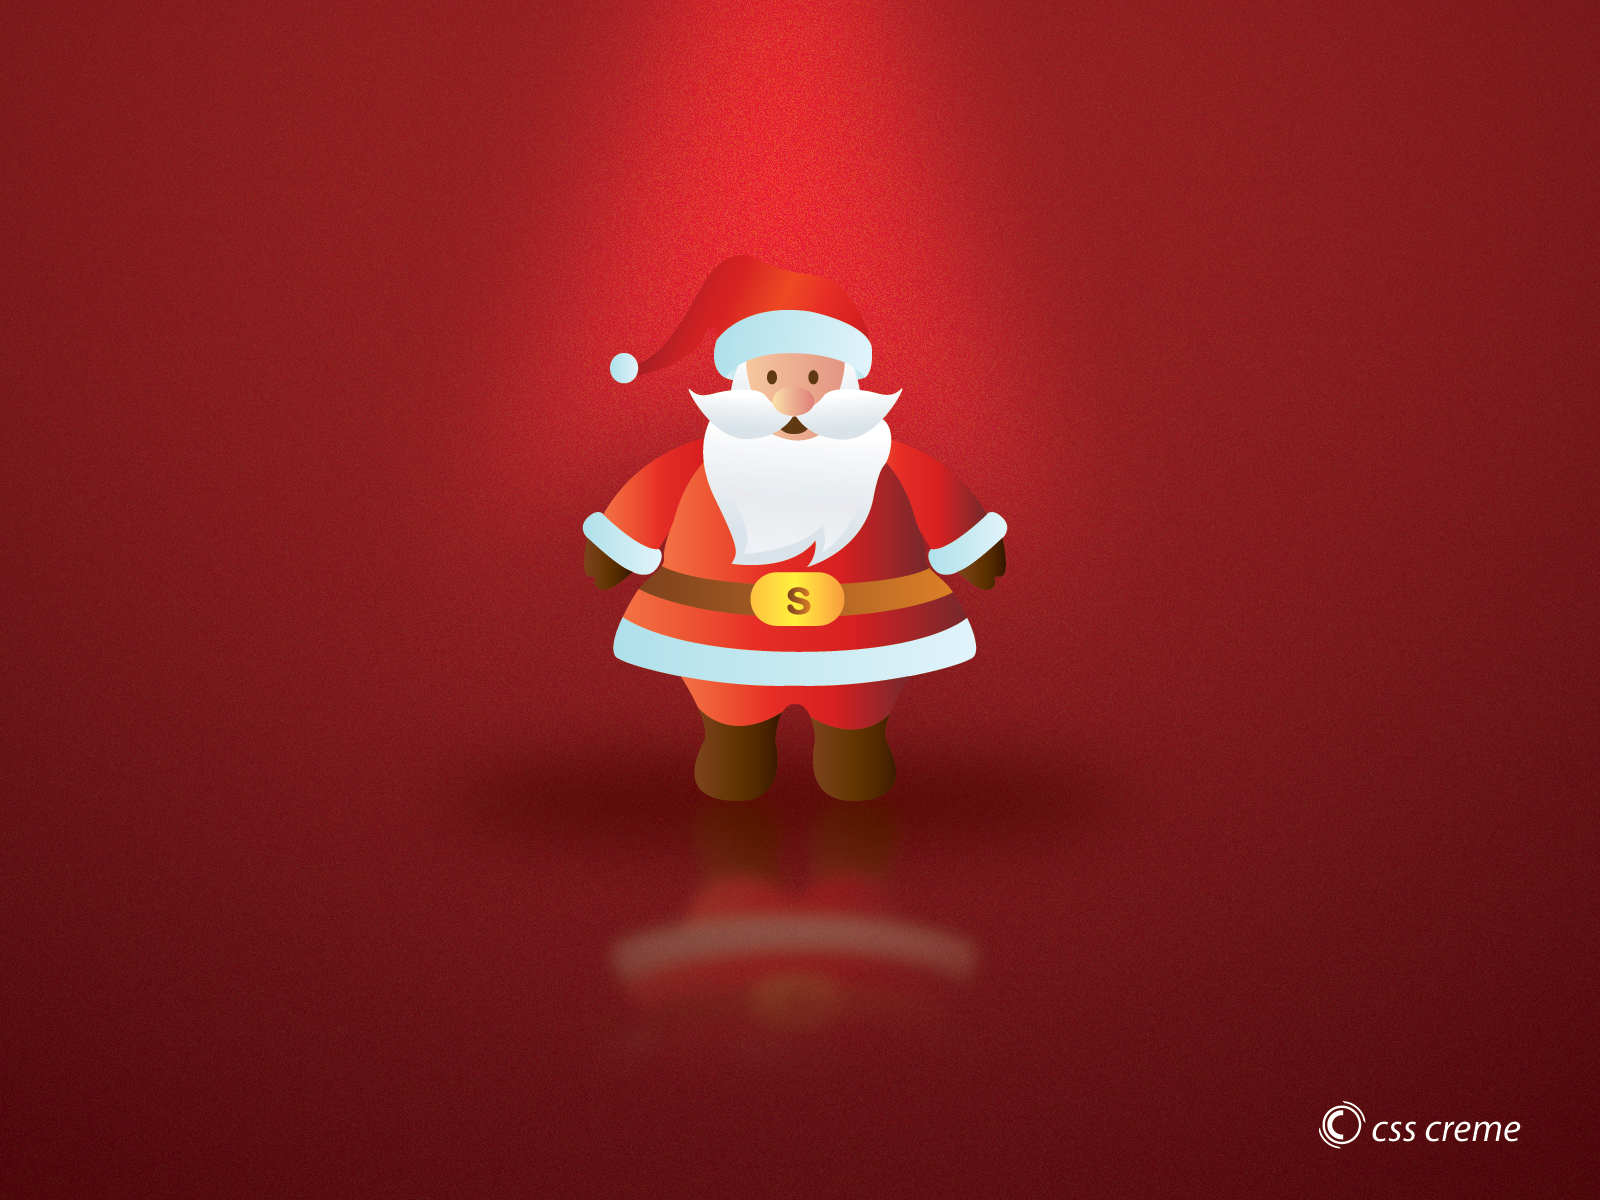 Cool Santa Claus Background Wallpaper